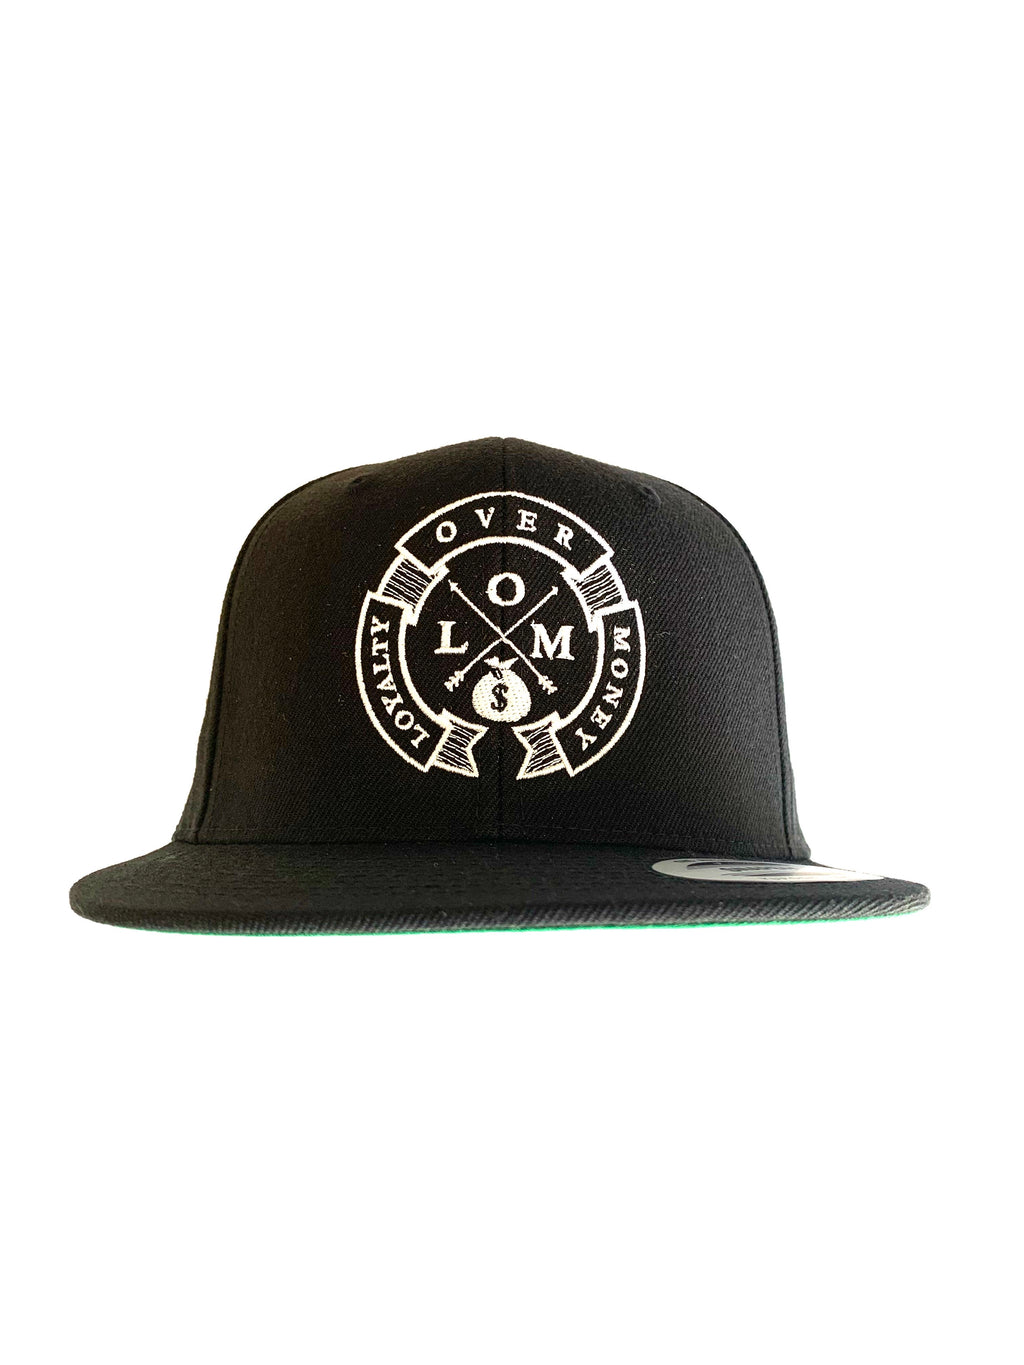 New logo loyalty over money hat